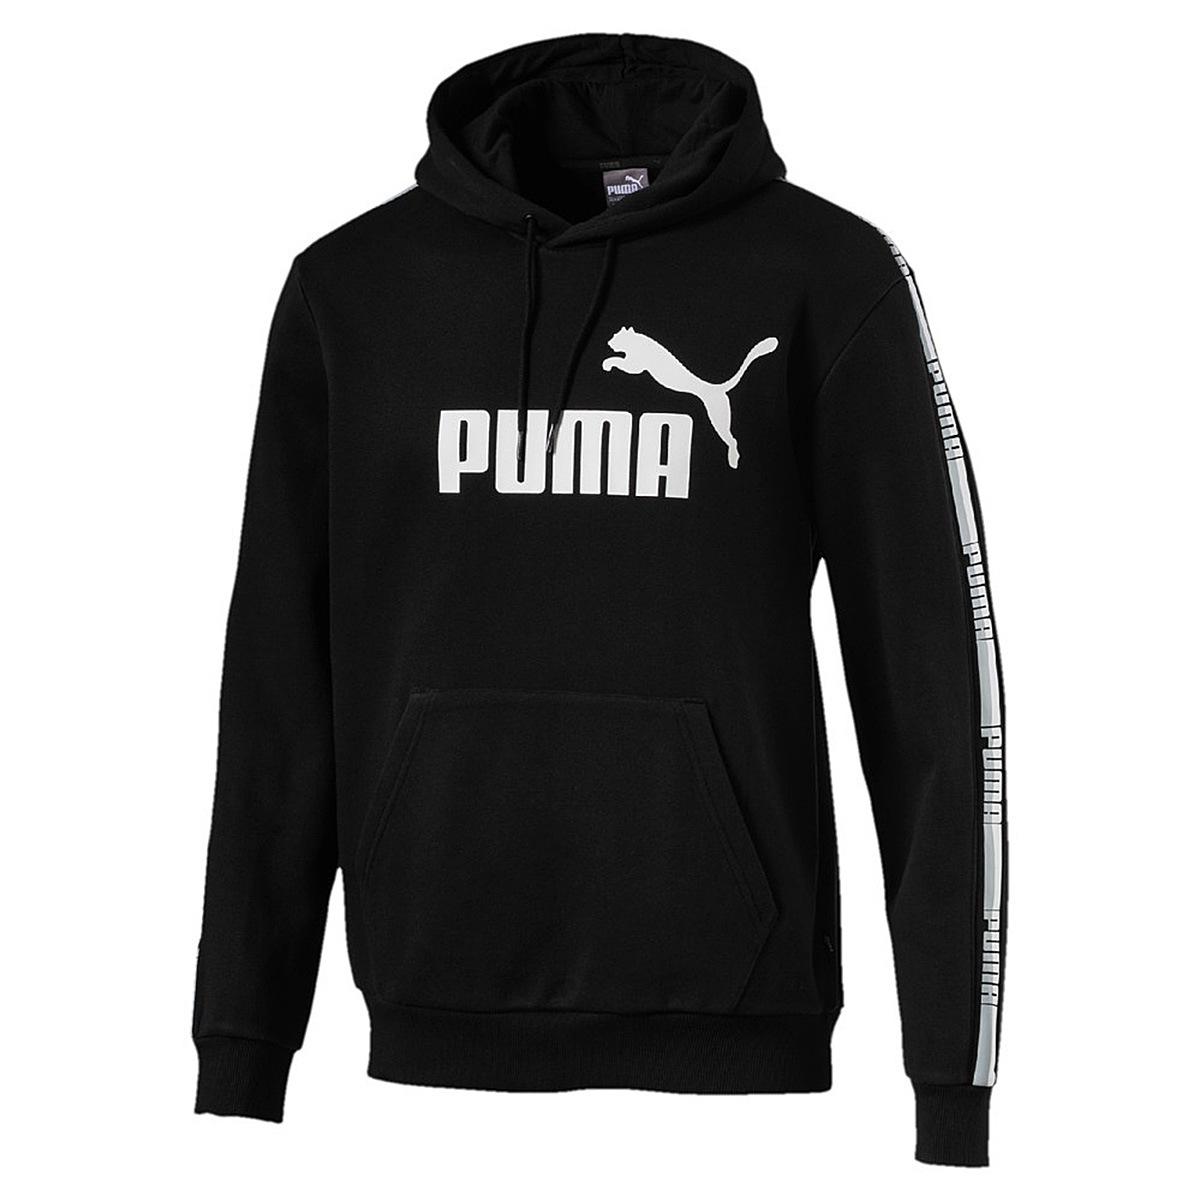 PUMA Tape Hoody  No. 1 Logo Herren Sweatshirt Kapuzenpullover schwarz 852416